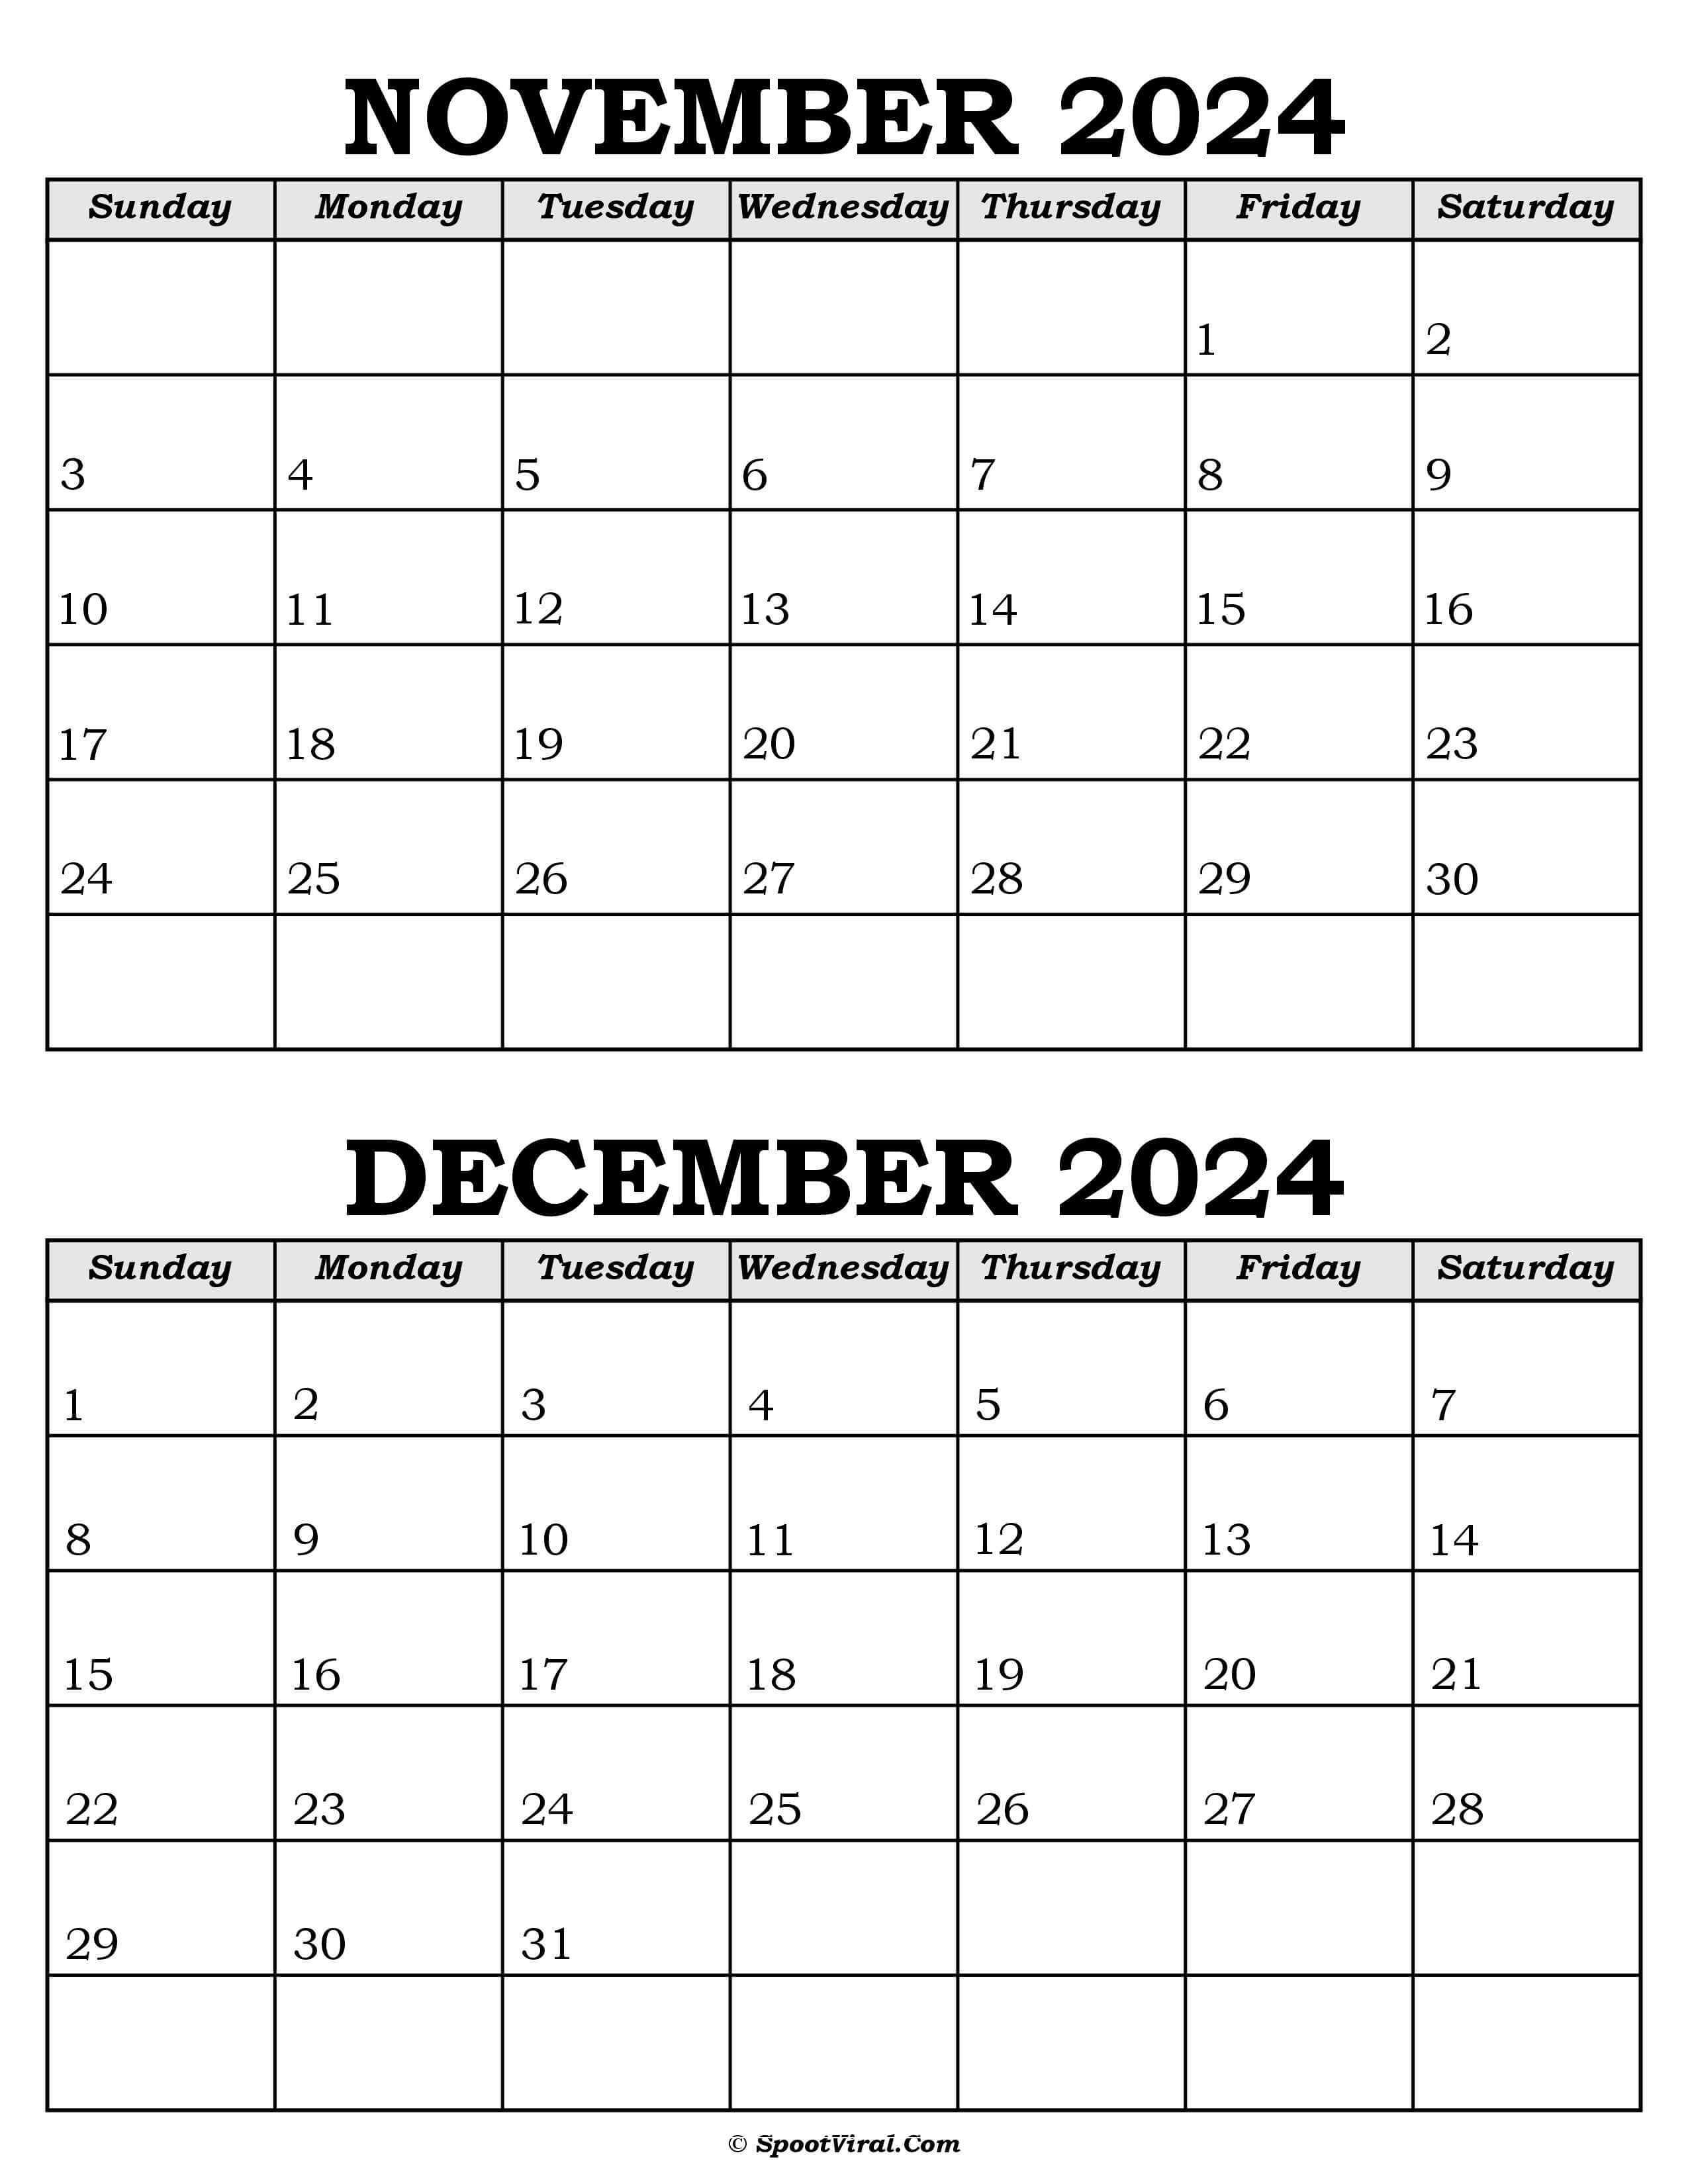 November and December Calendar 2024